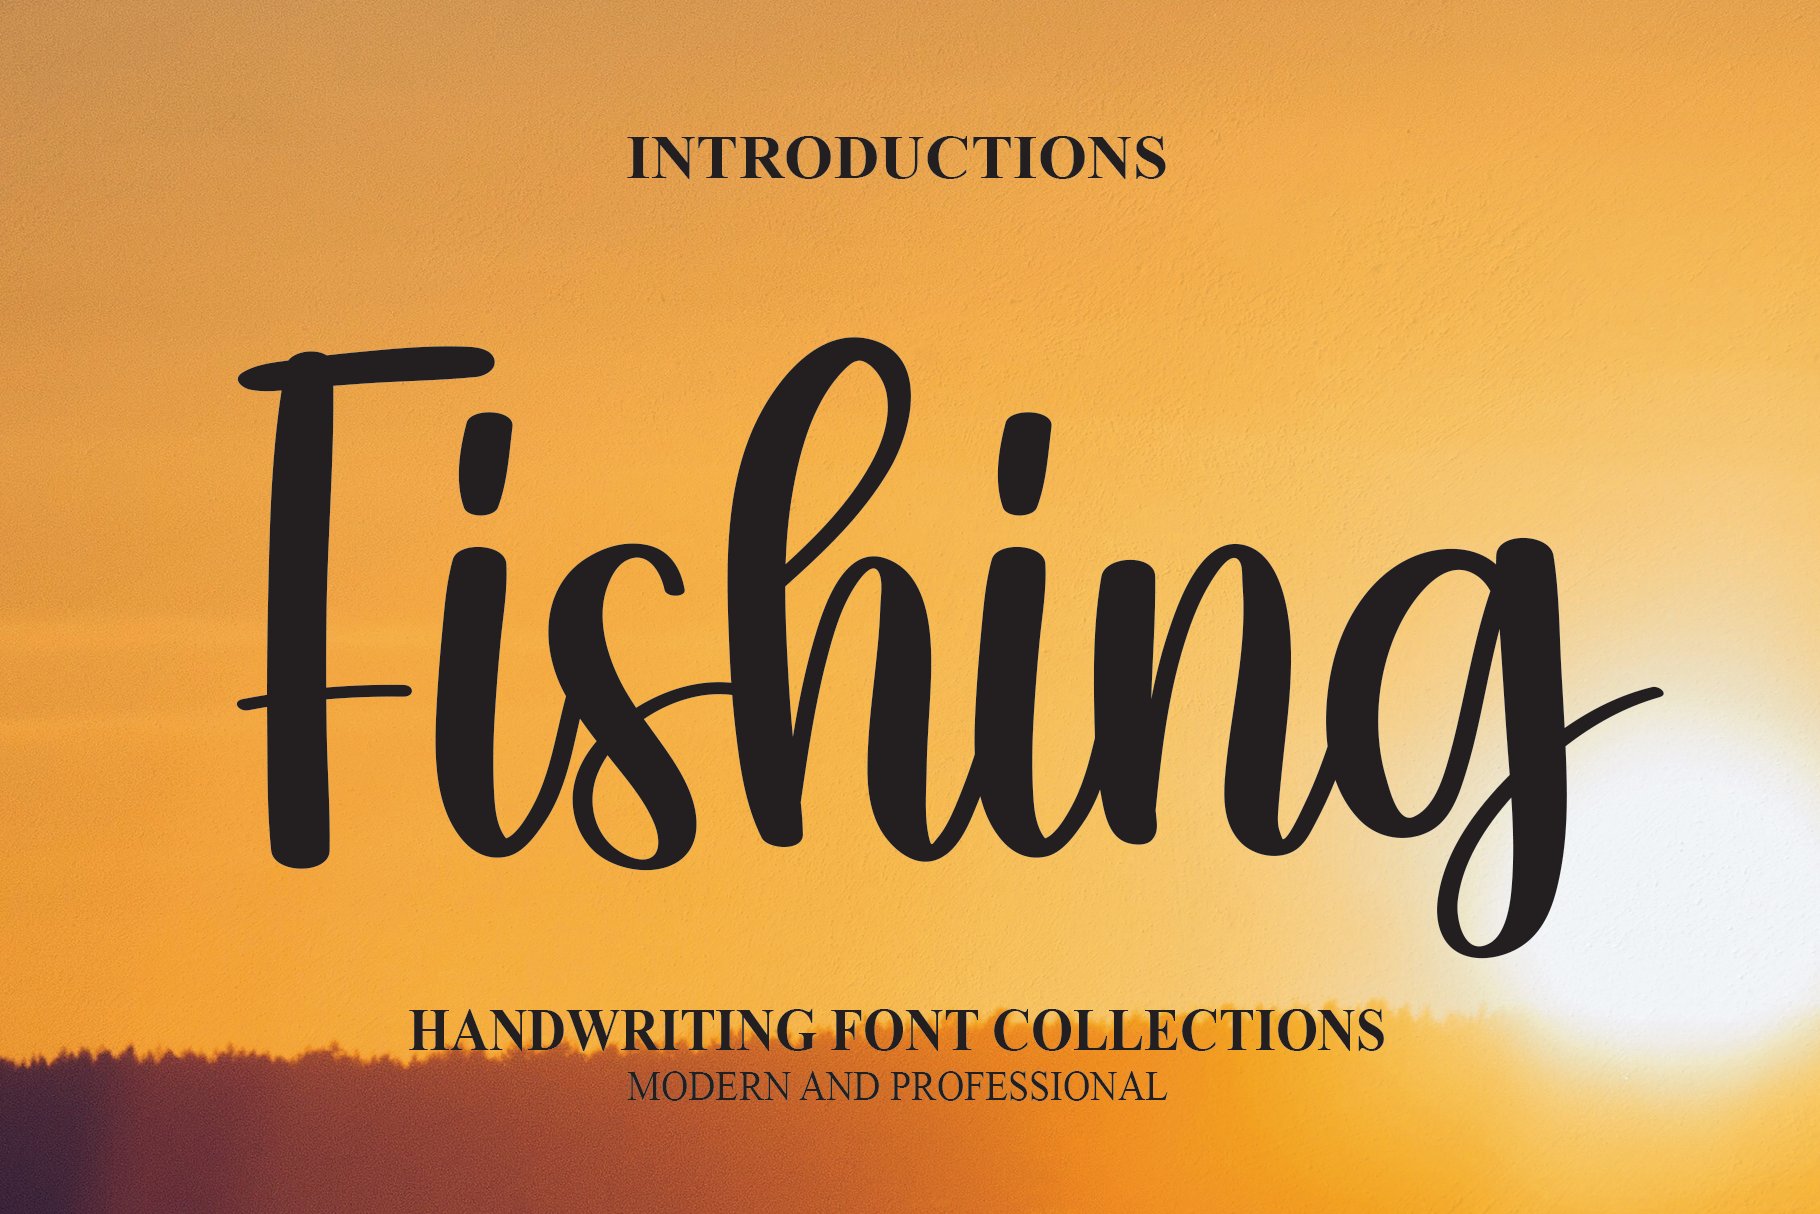 Fishing | Script Font cover image.